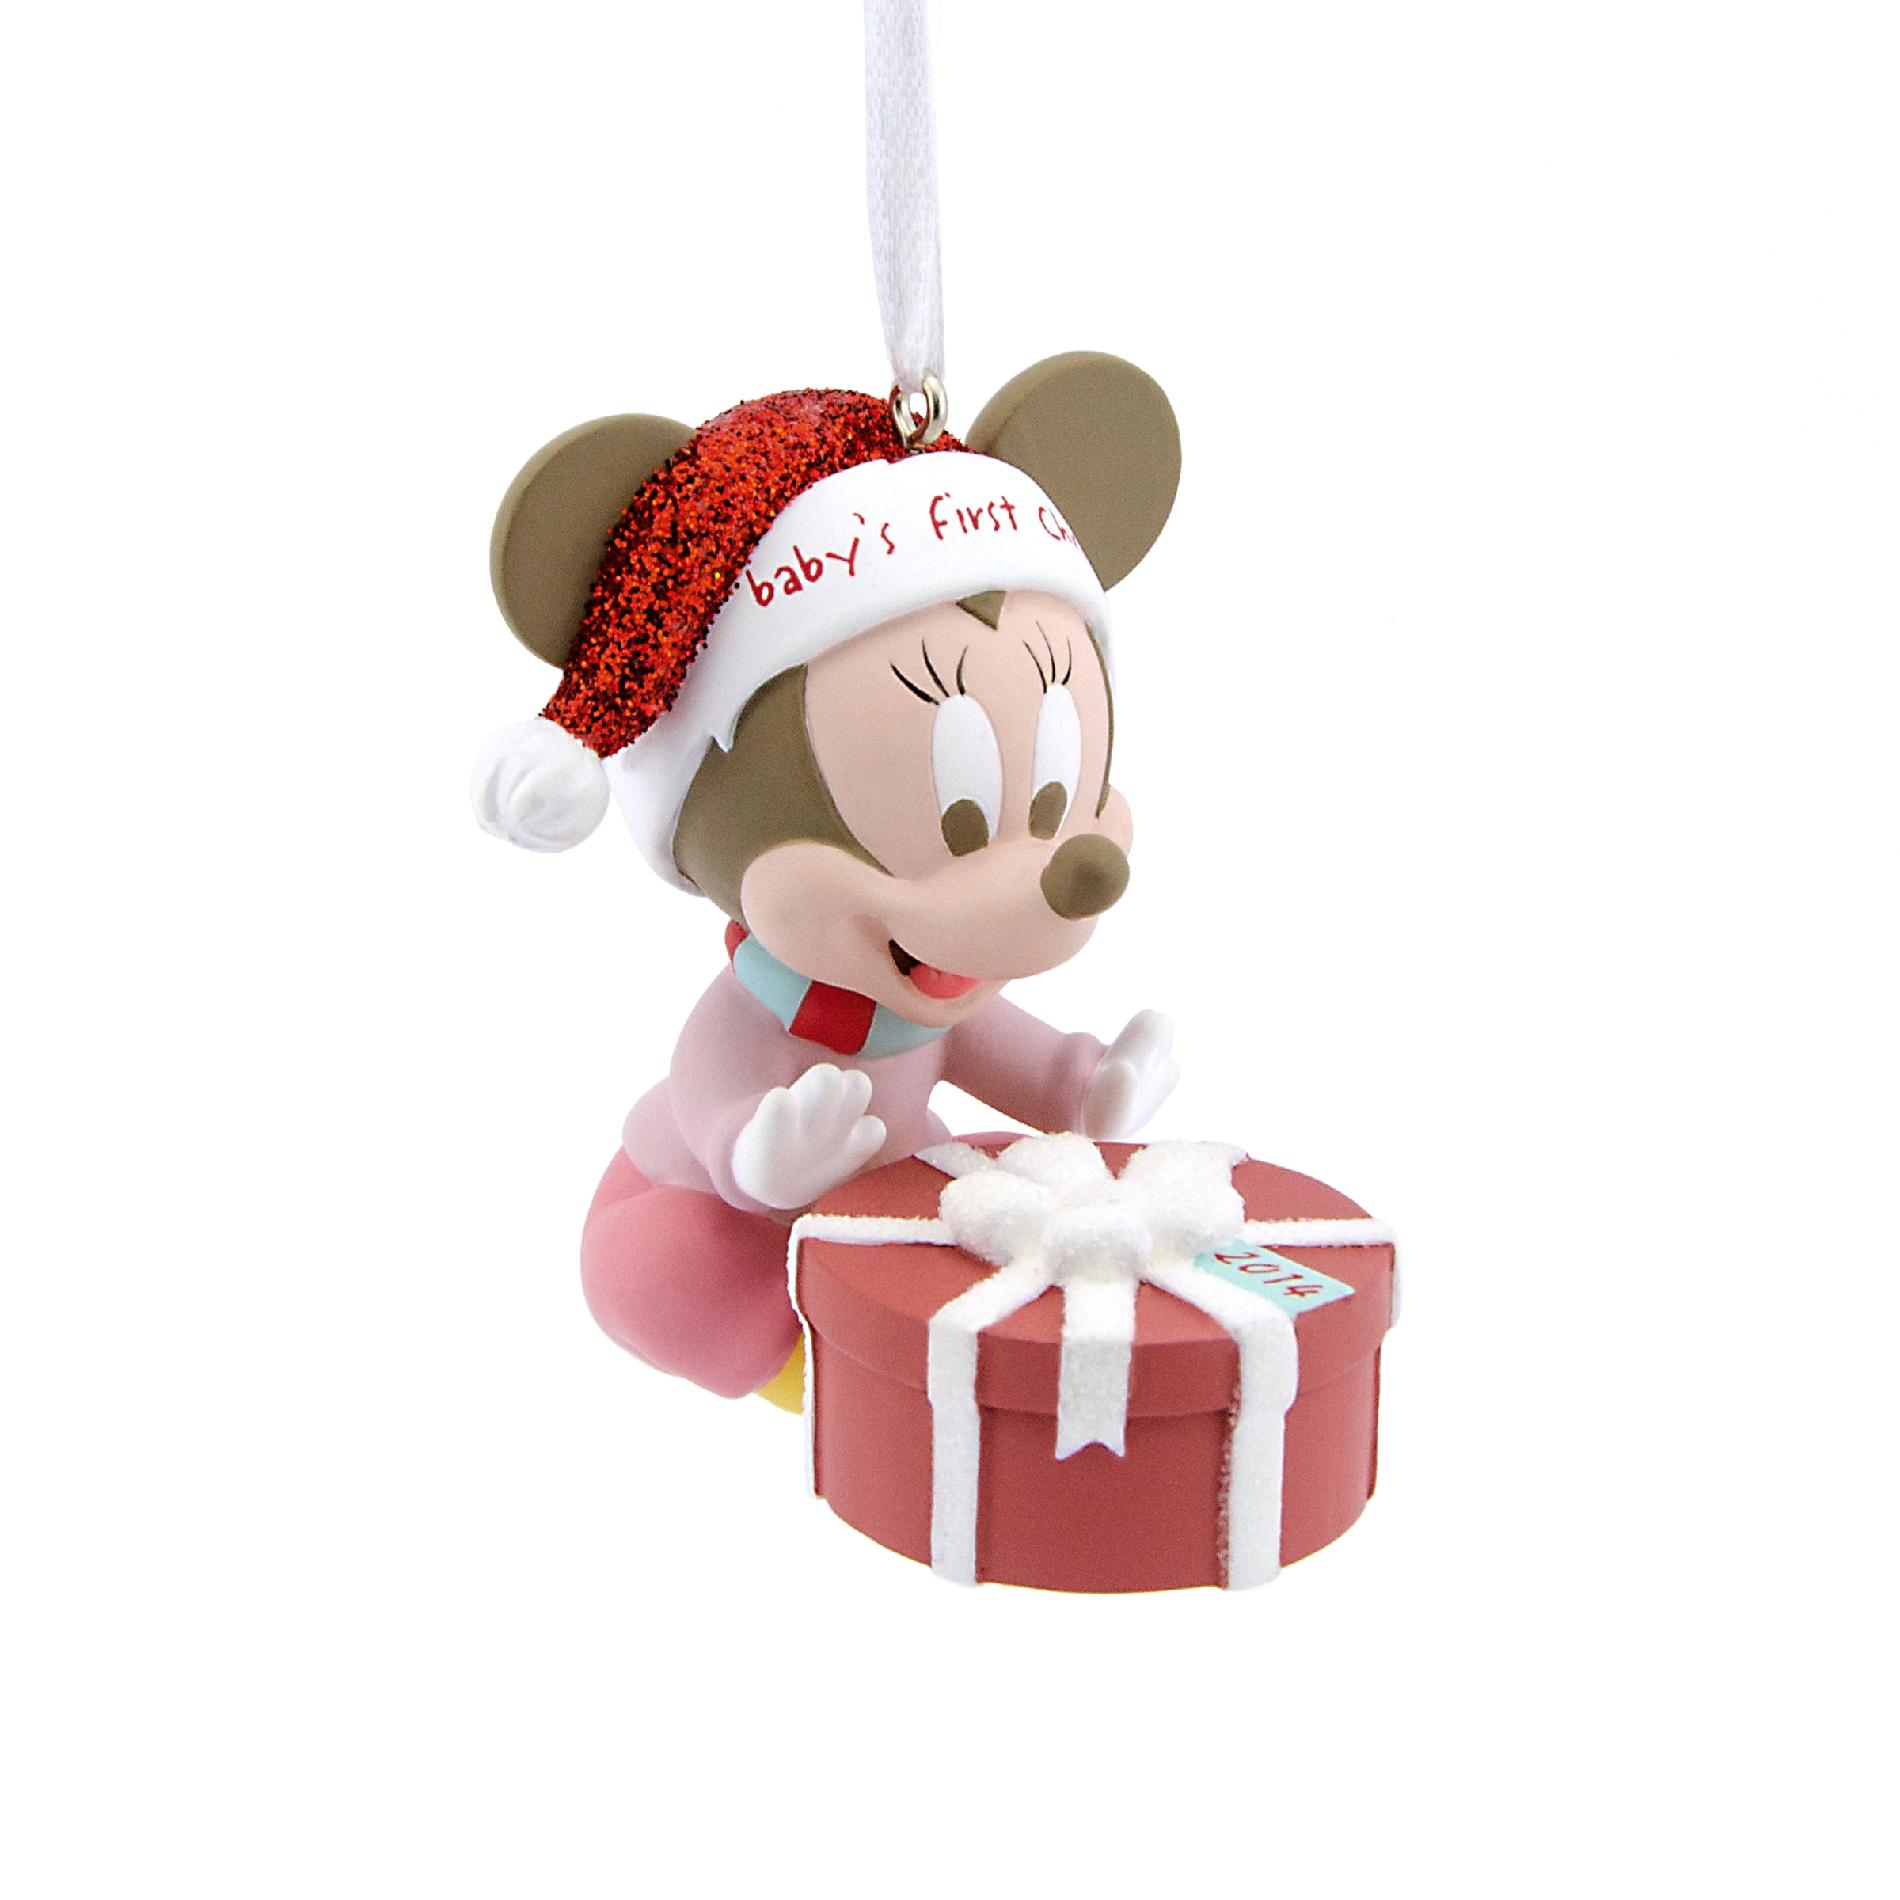 Disney Hallmark Minnie Mouse Baby's First Christmas 2014 Ornament.